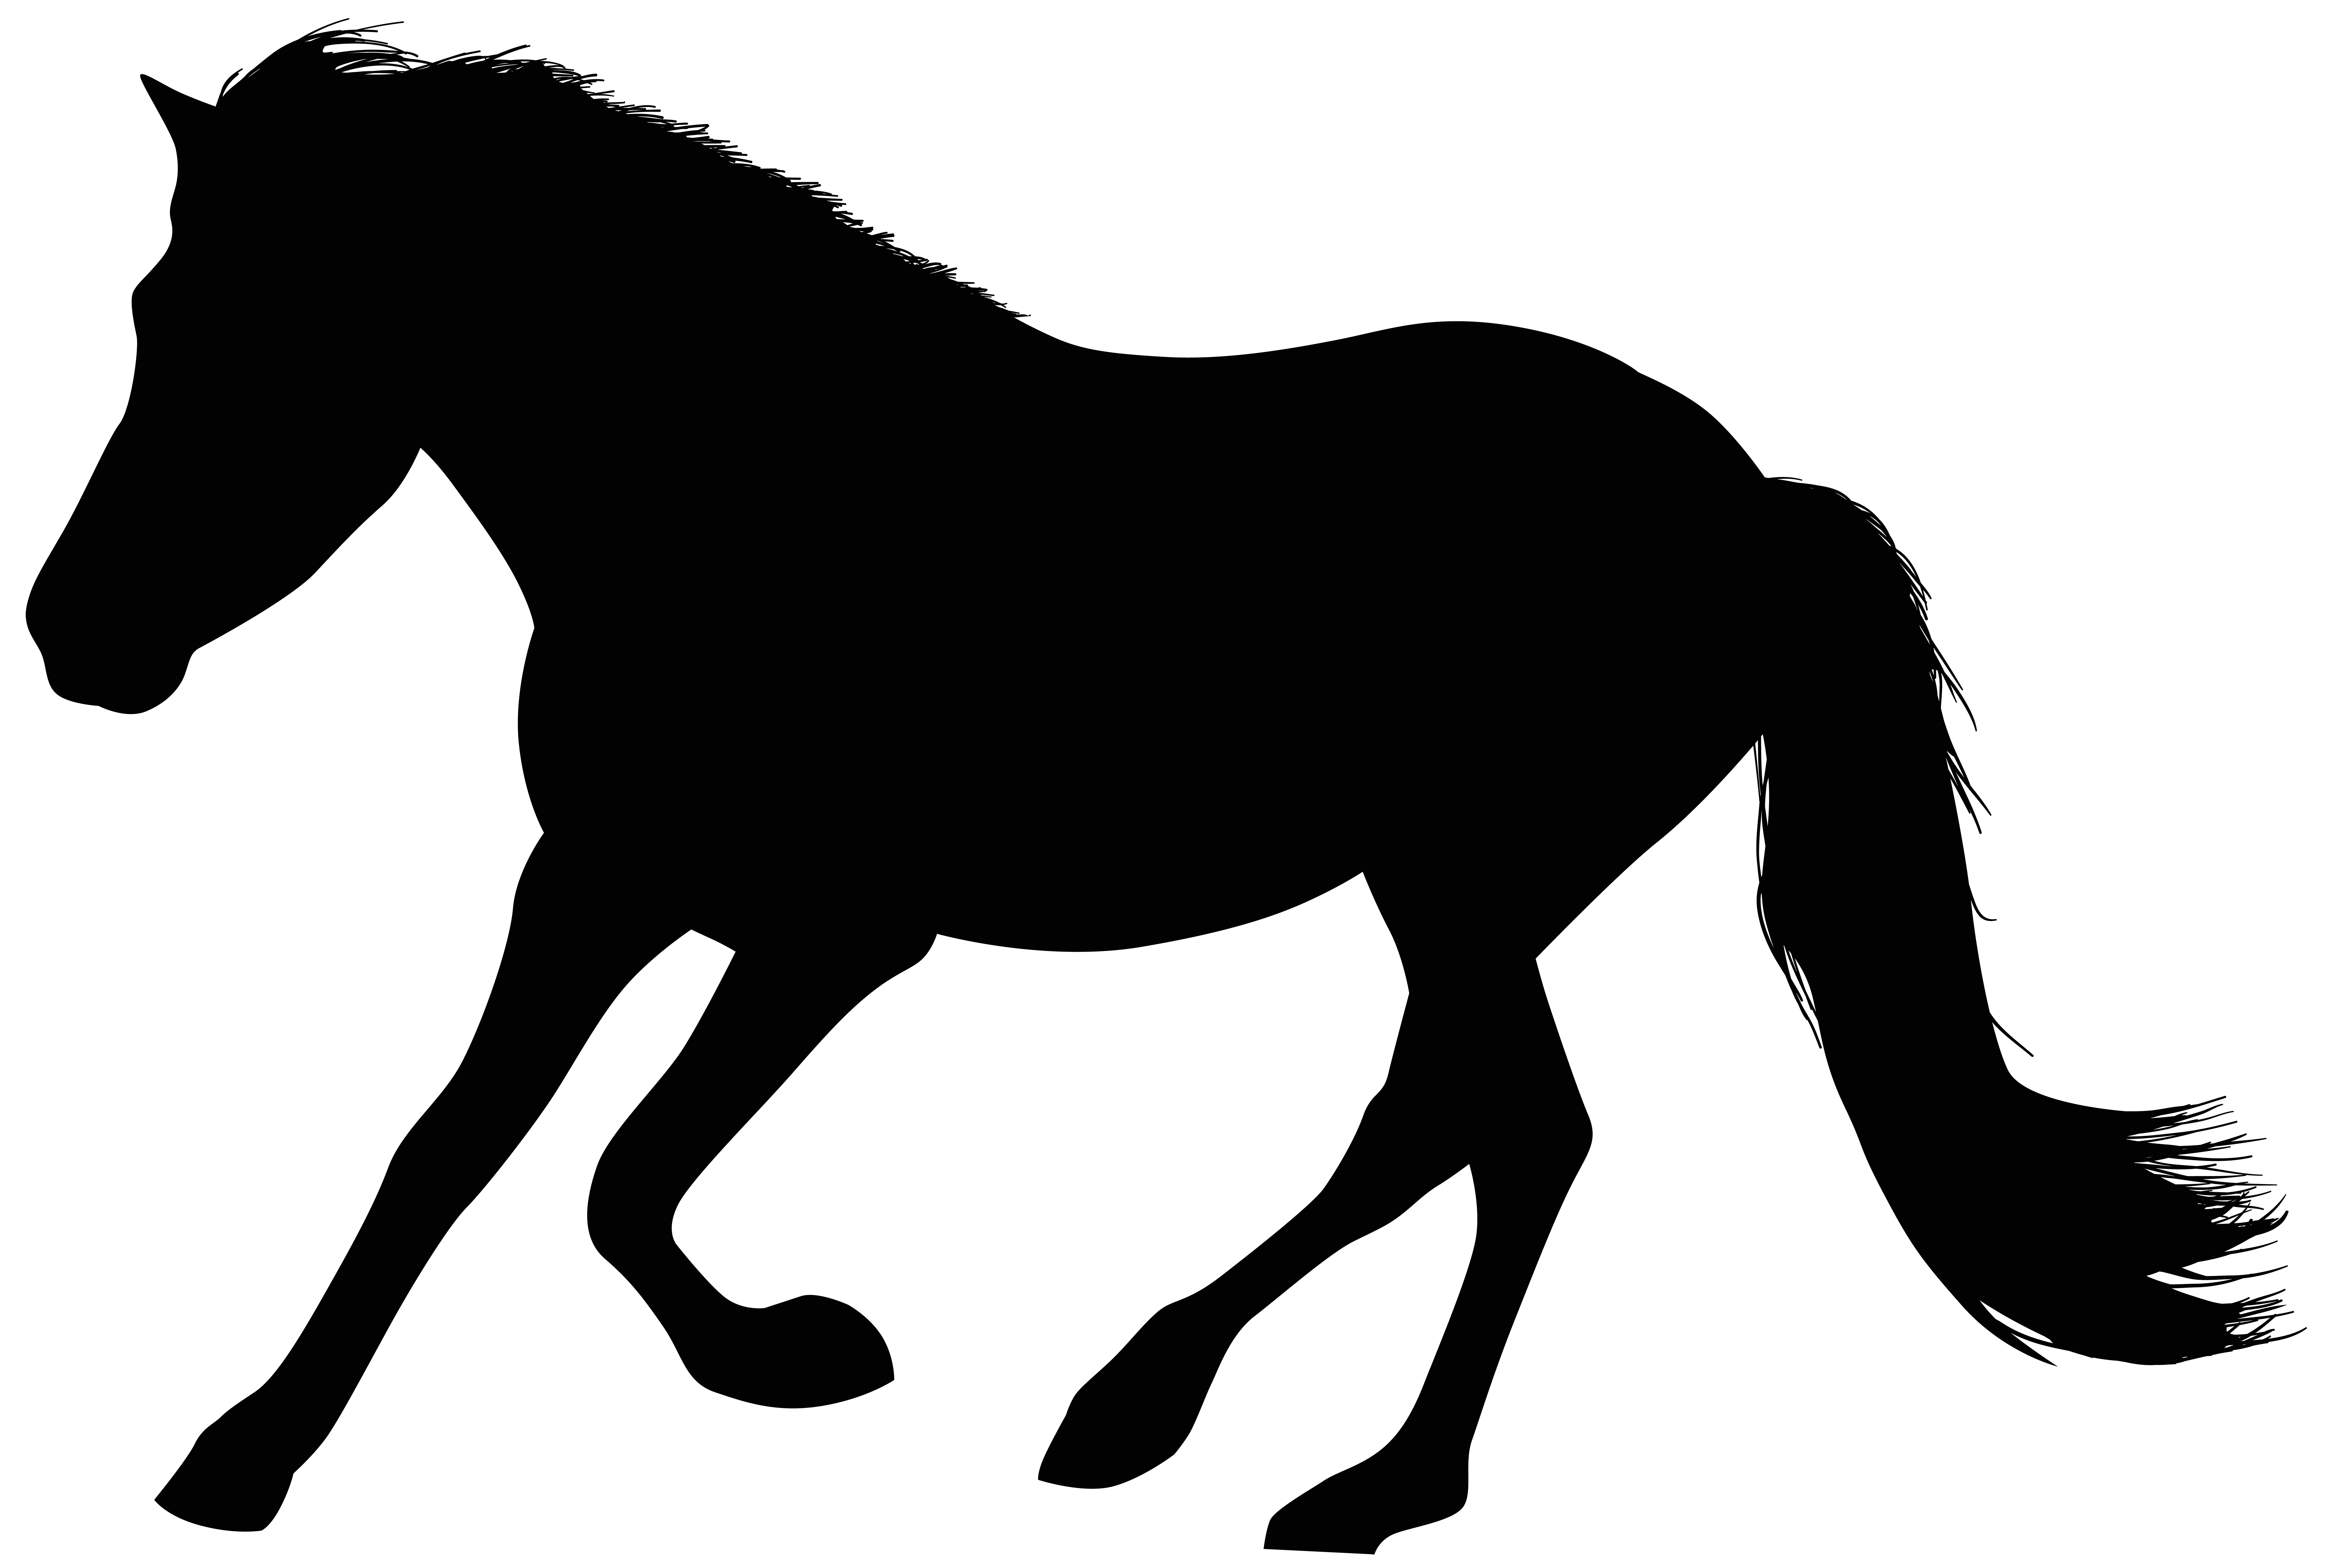 Running Horse Silhouette Clip Art Image.